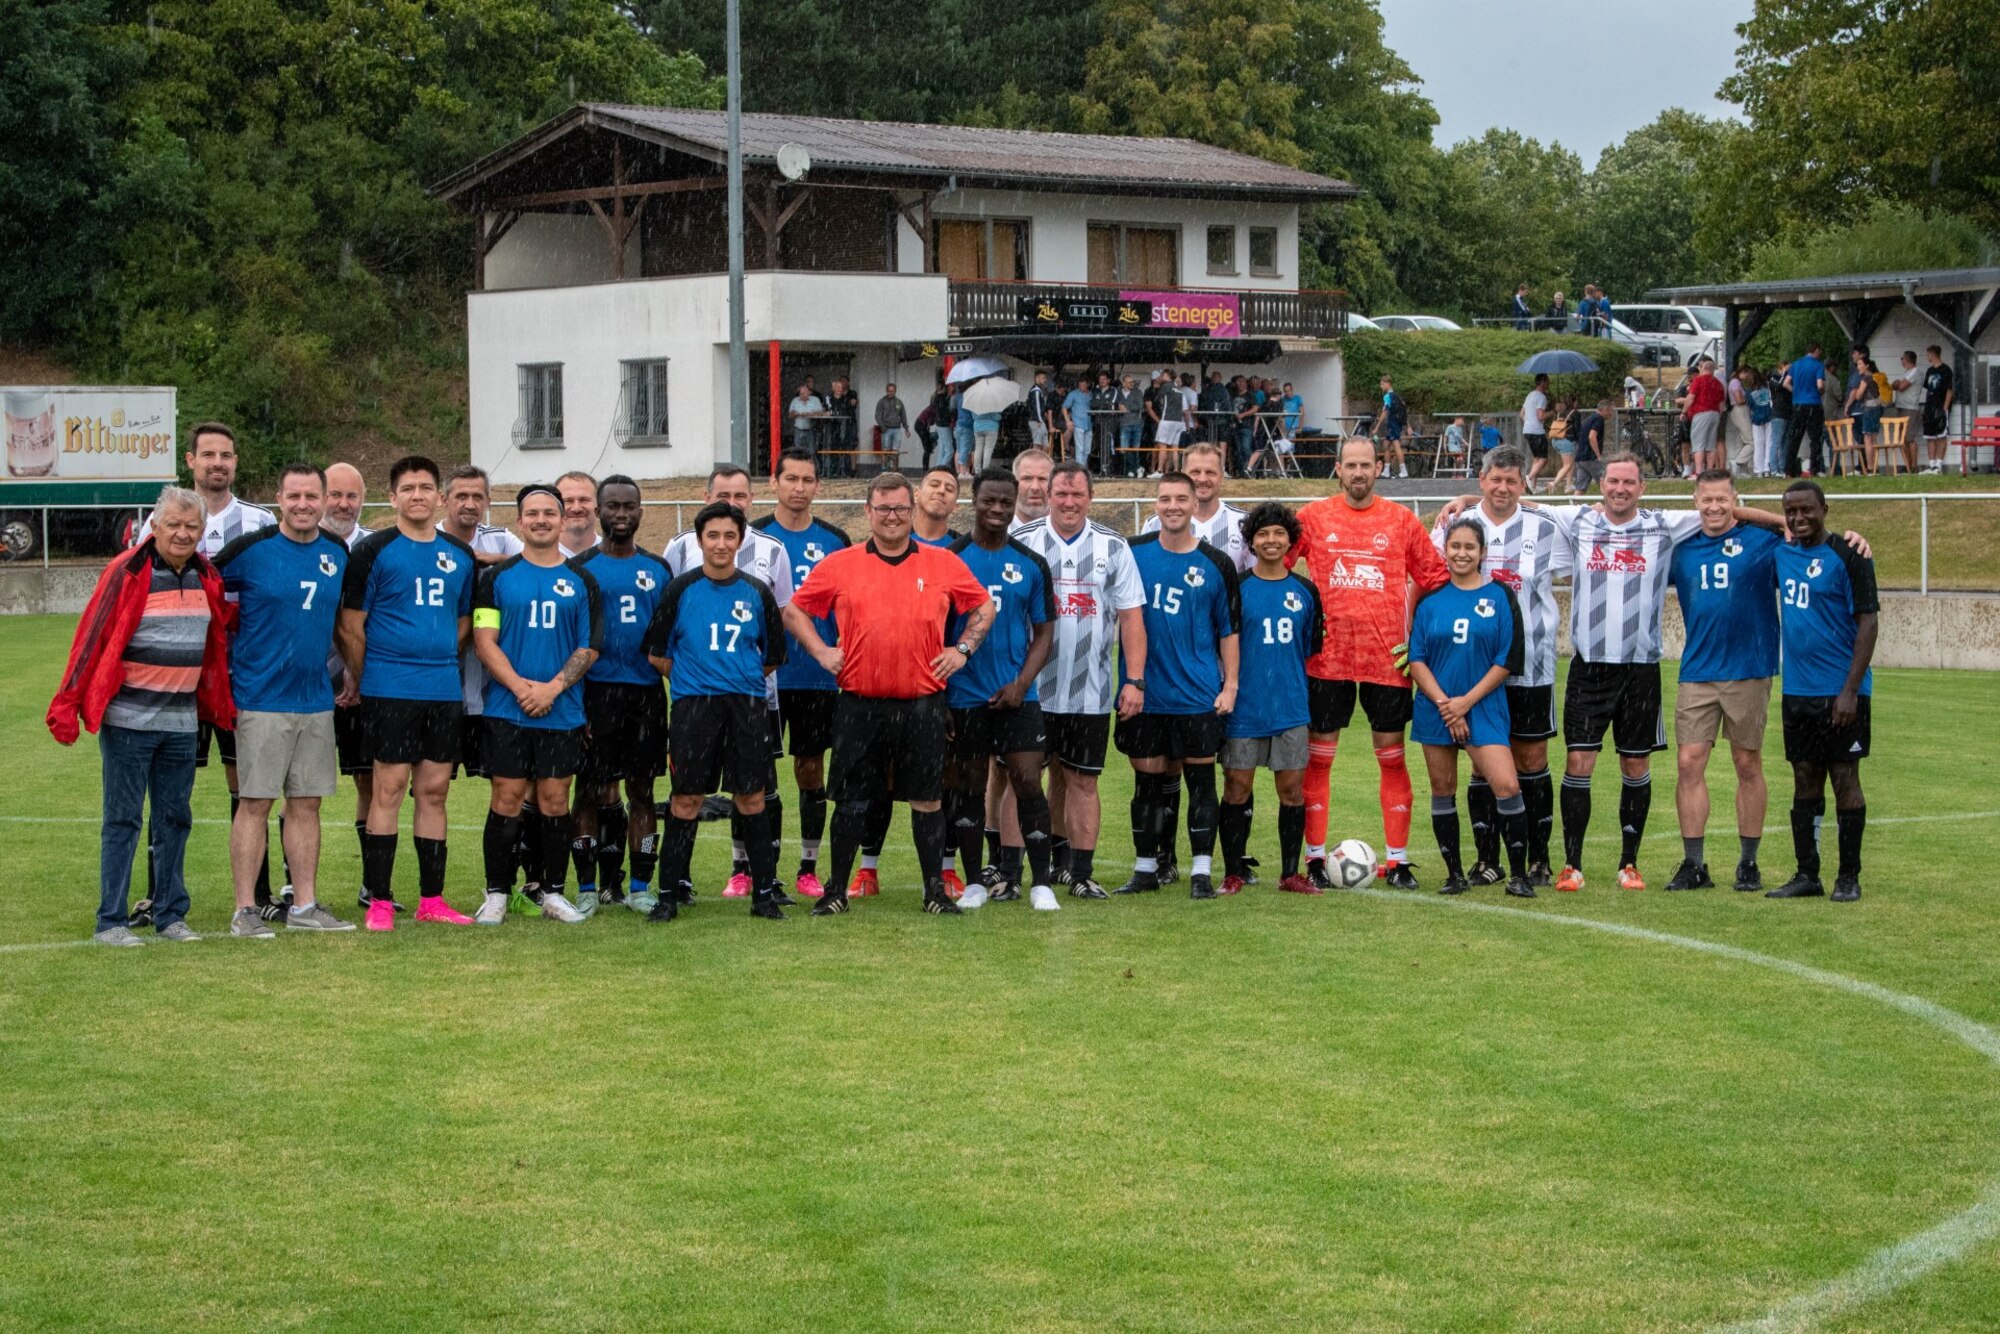 Members of the Spangdahlem Air Base soccer team and Binsfeld team pose in Binsfeld, Germany, July 15, 2023.